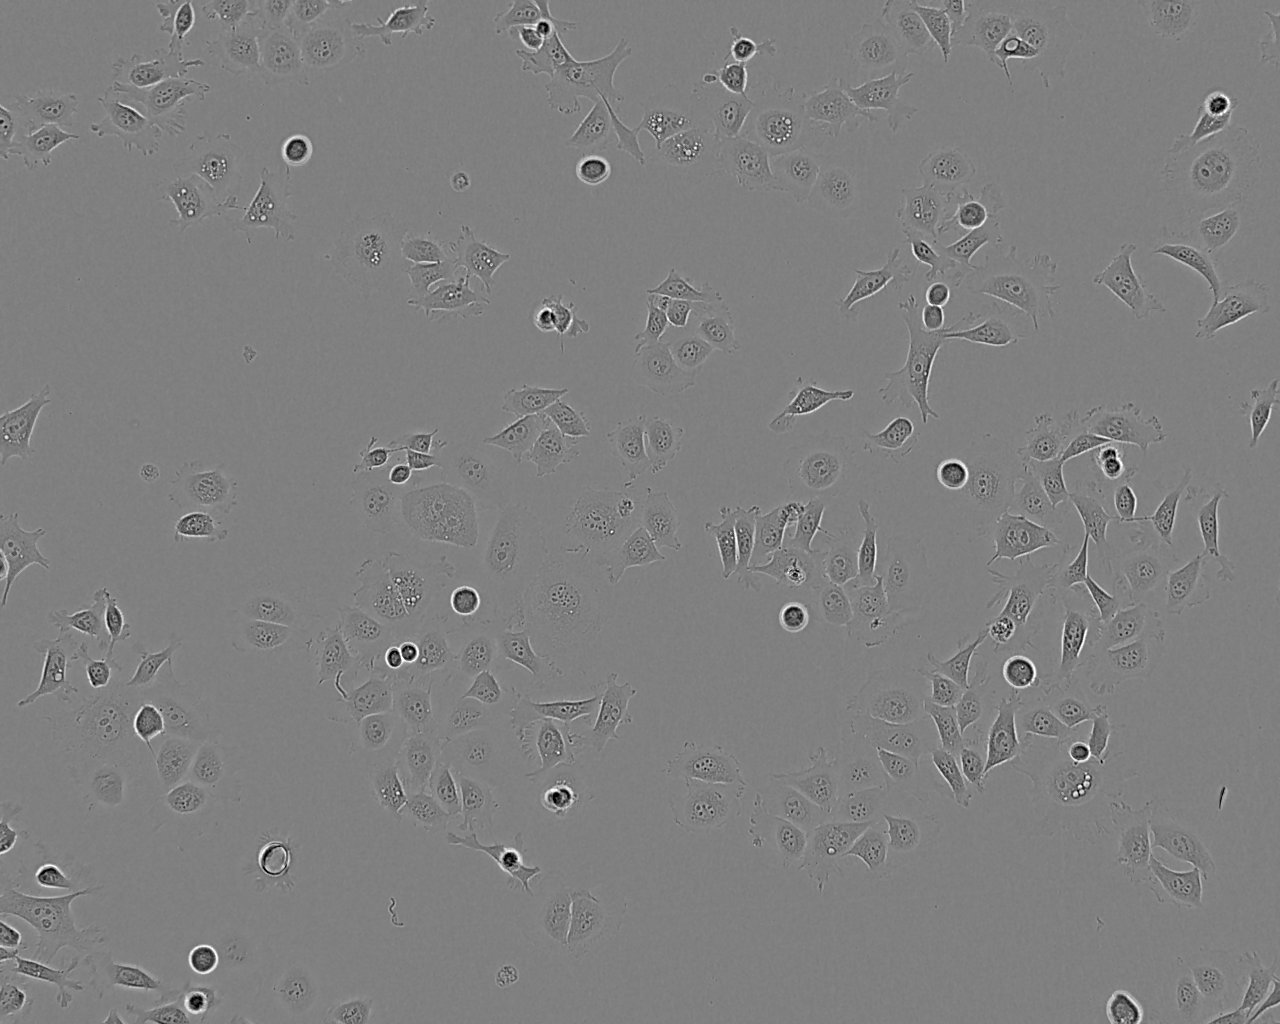 WEHI-279 Cells(赠送Str鉴定报告)|小鼠淋巴瘤细胞,WEHI-279 Cells